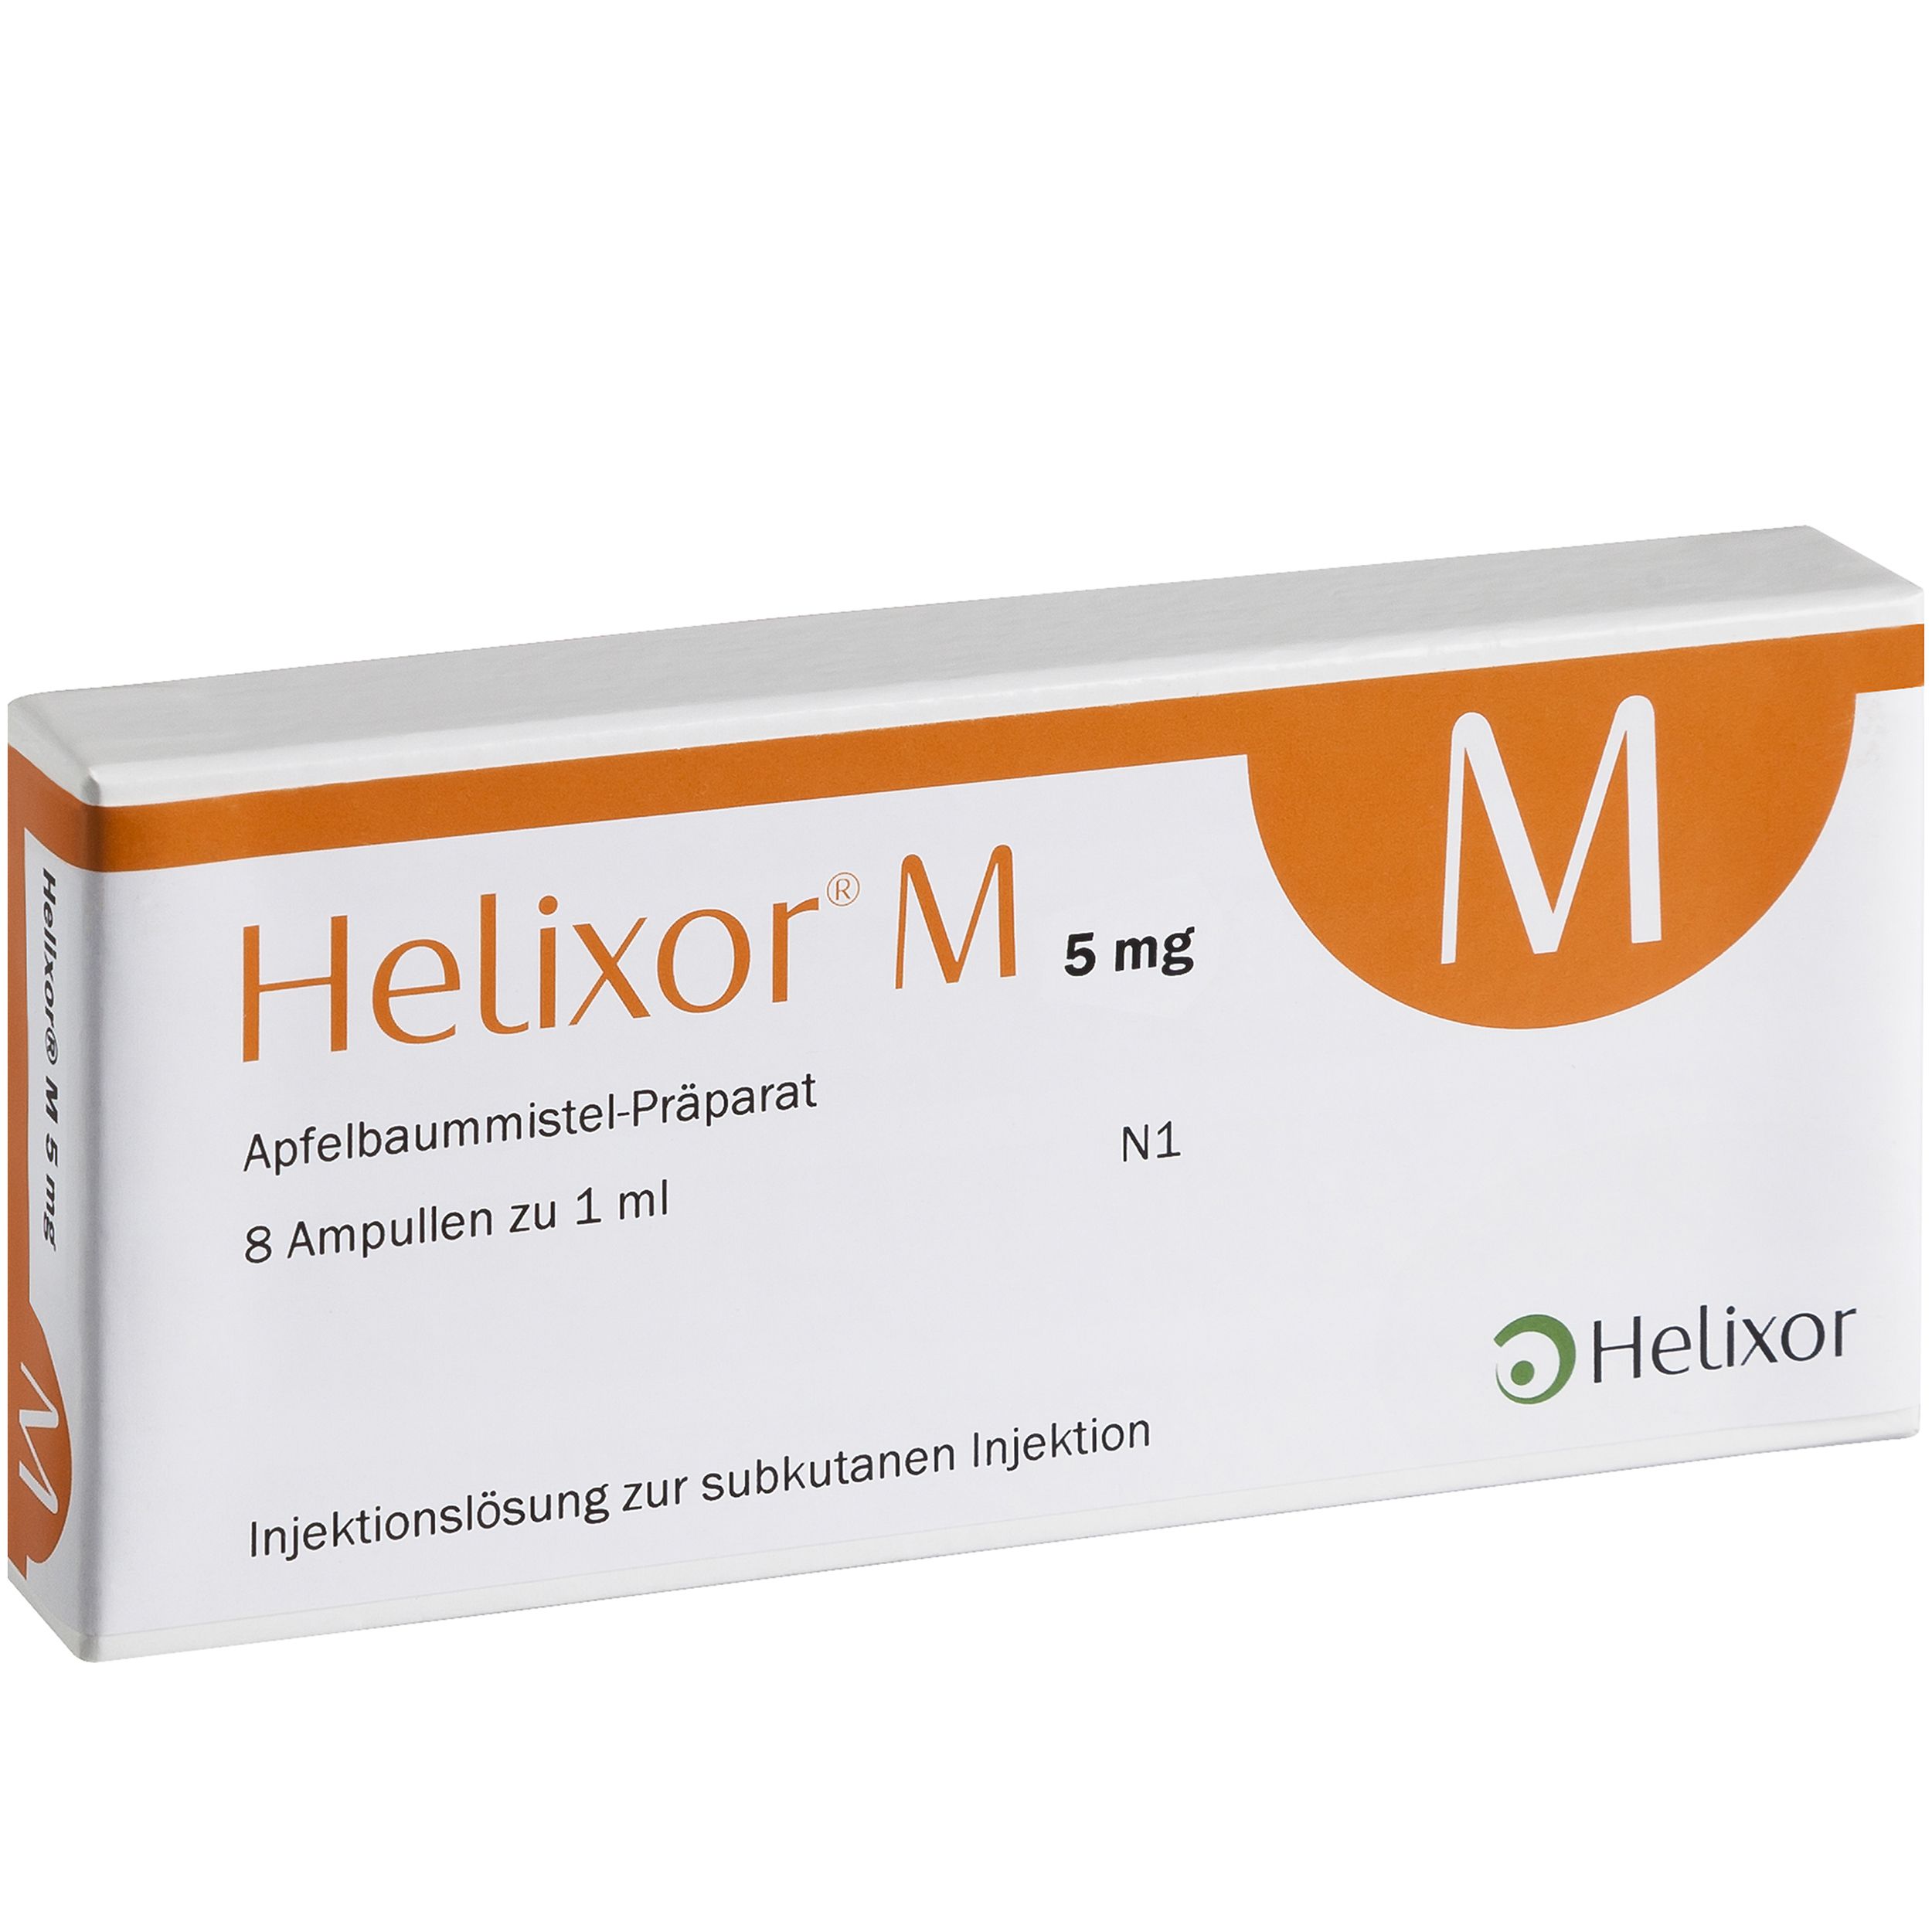 HELIXOR M fiole 5 mg